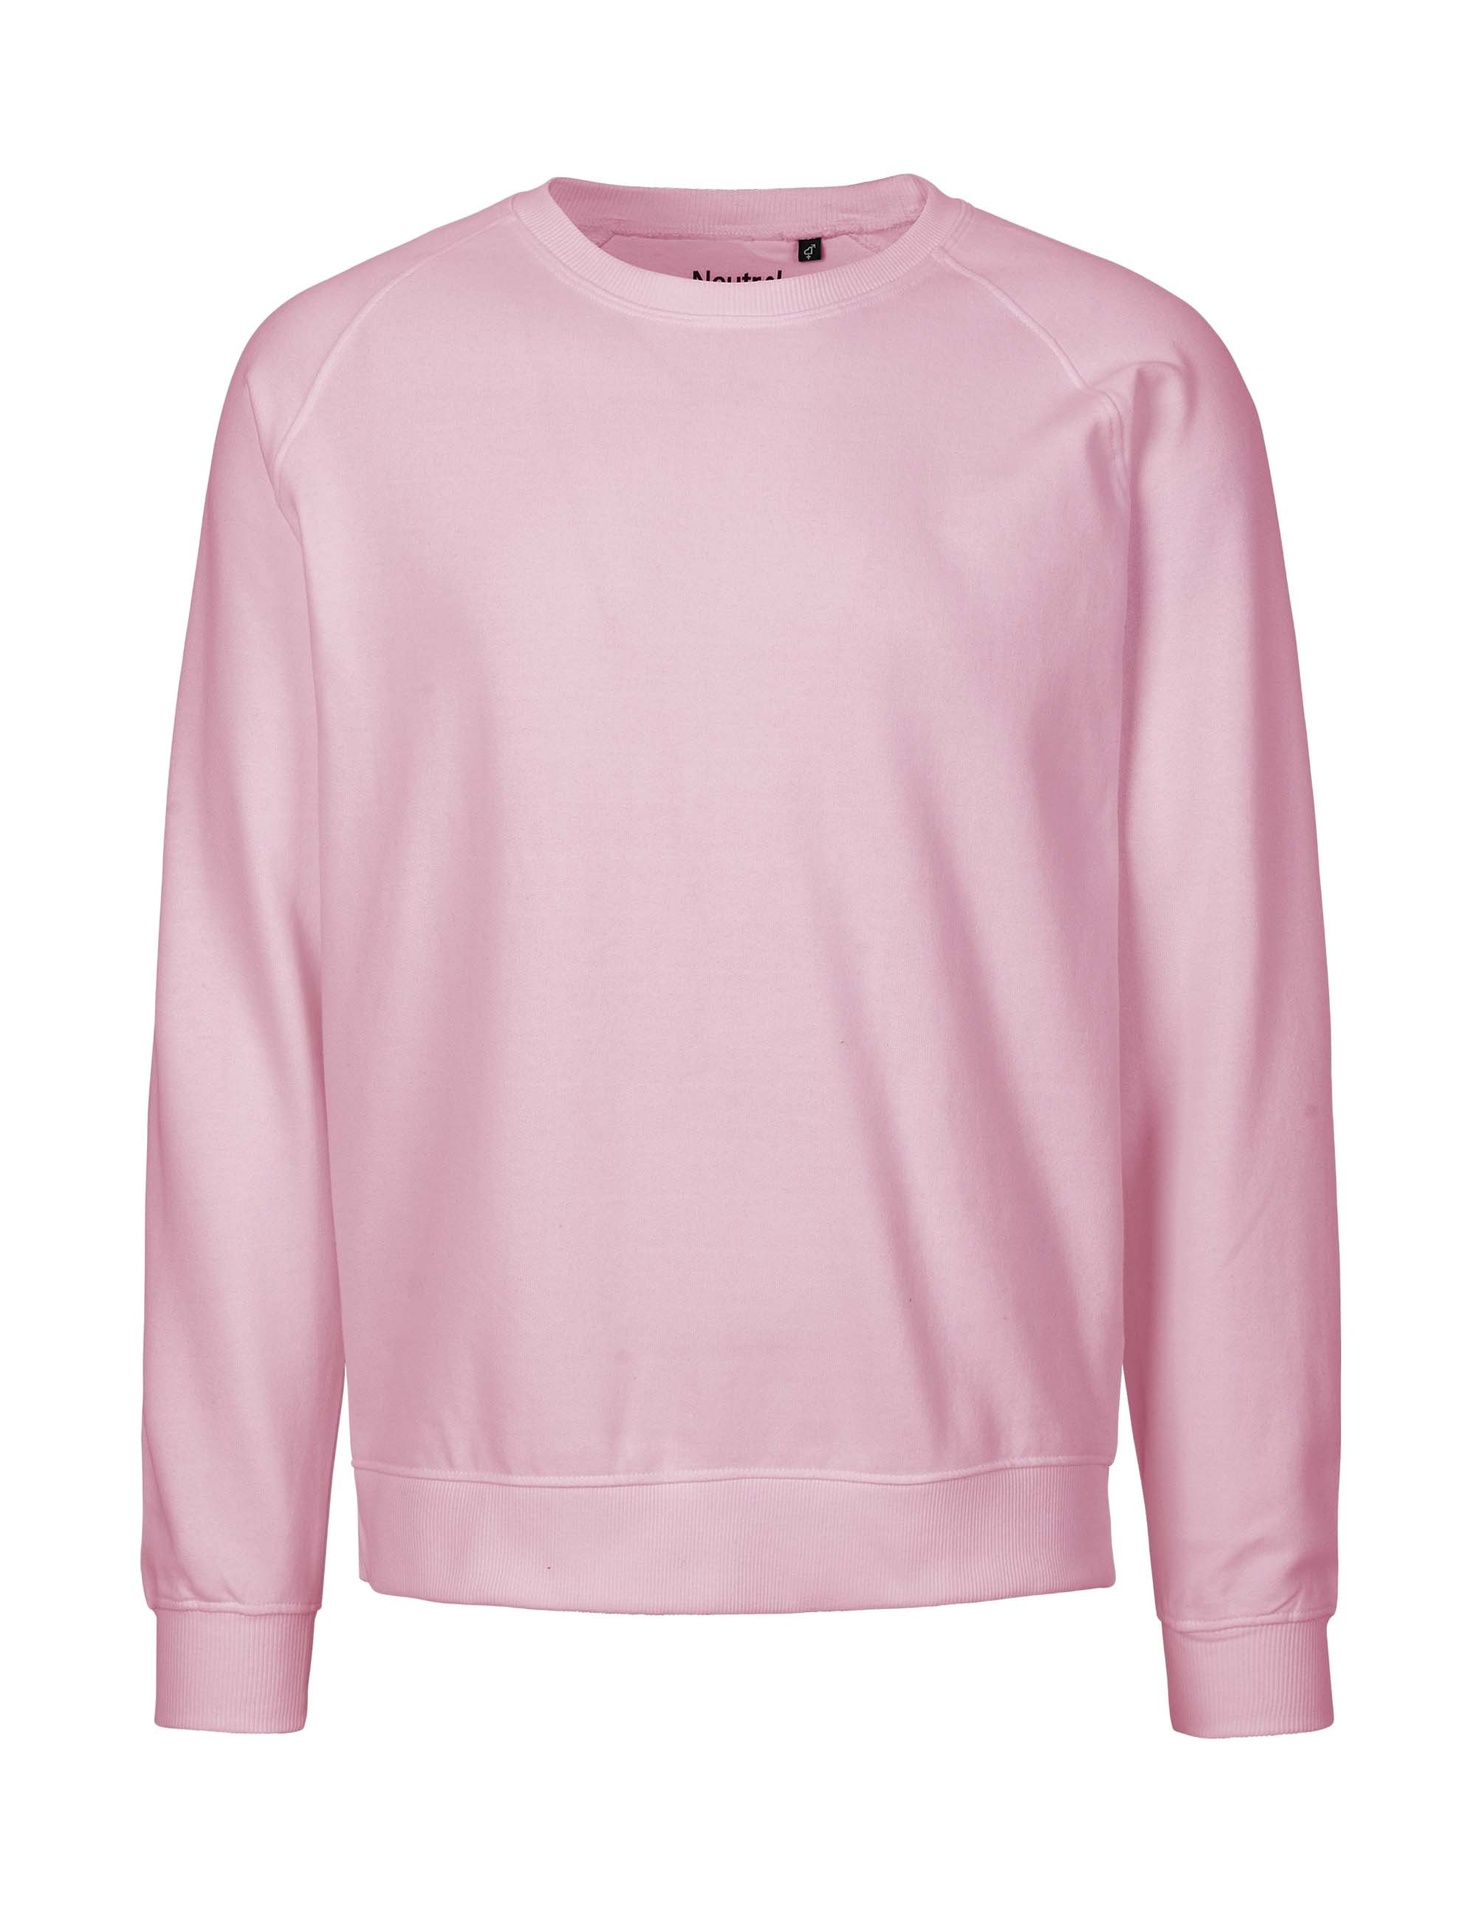 [PR/02741] Unisex Sweatshirt (Light Pink 20, 5XL)